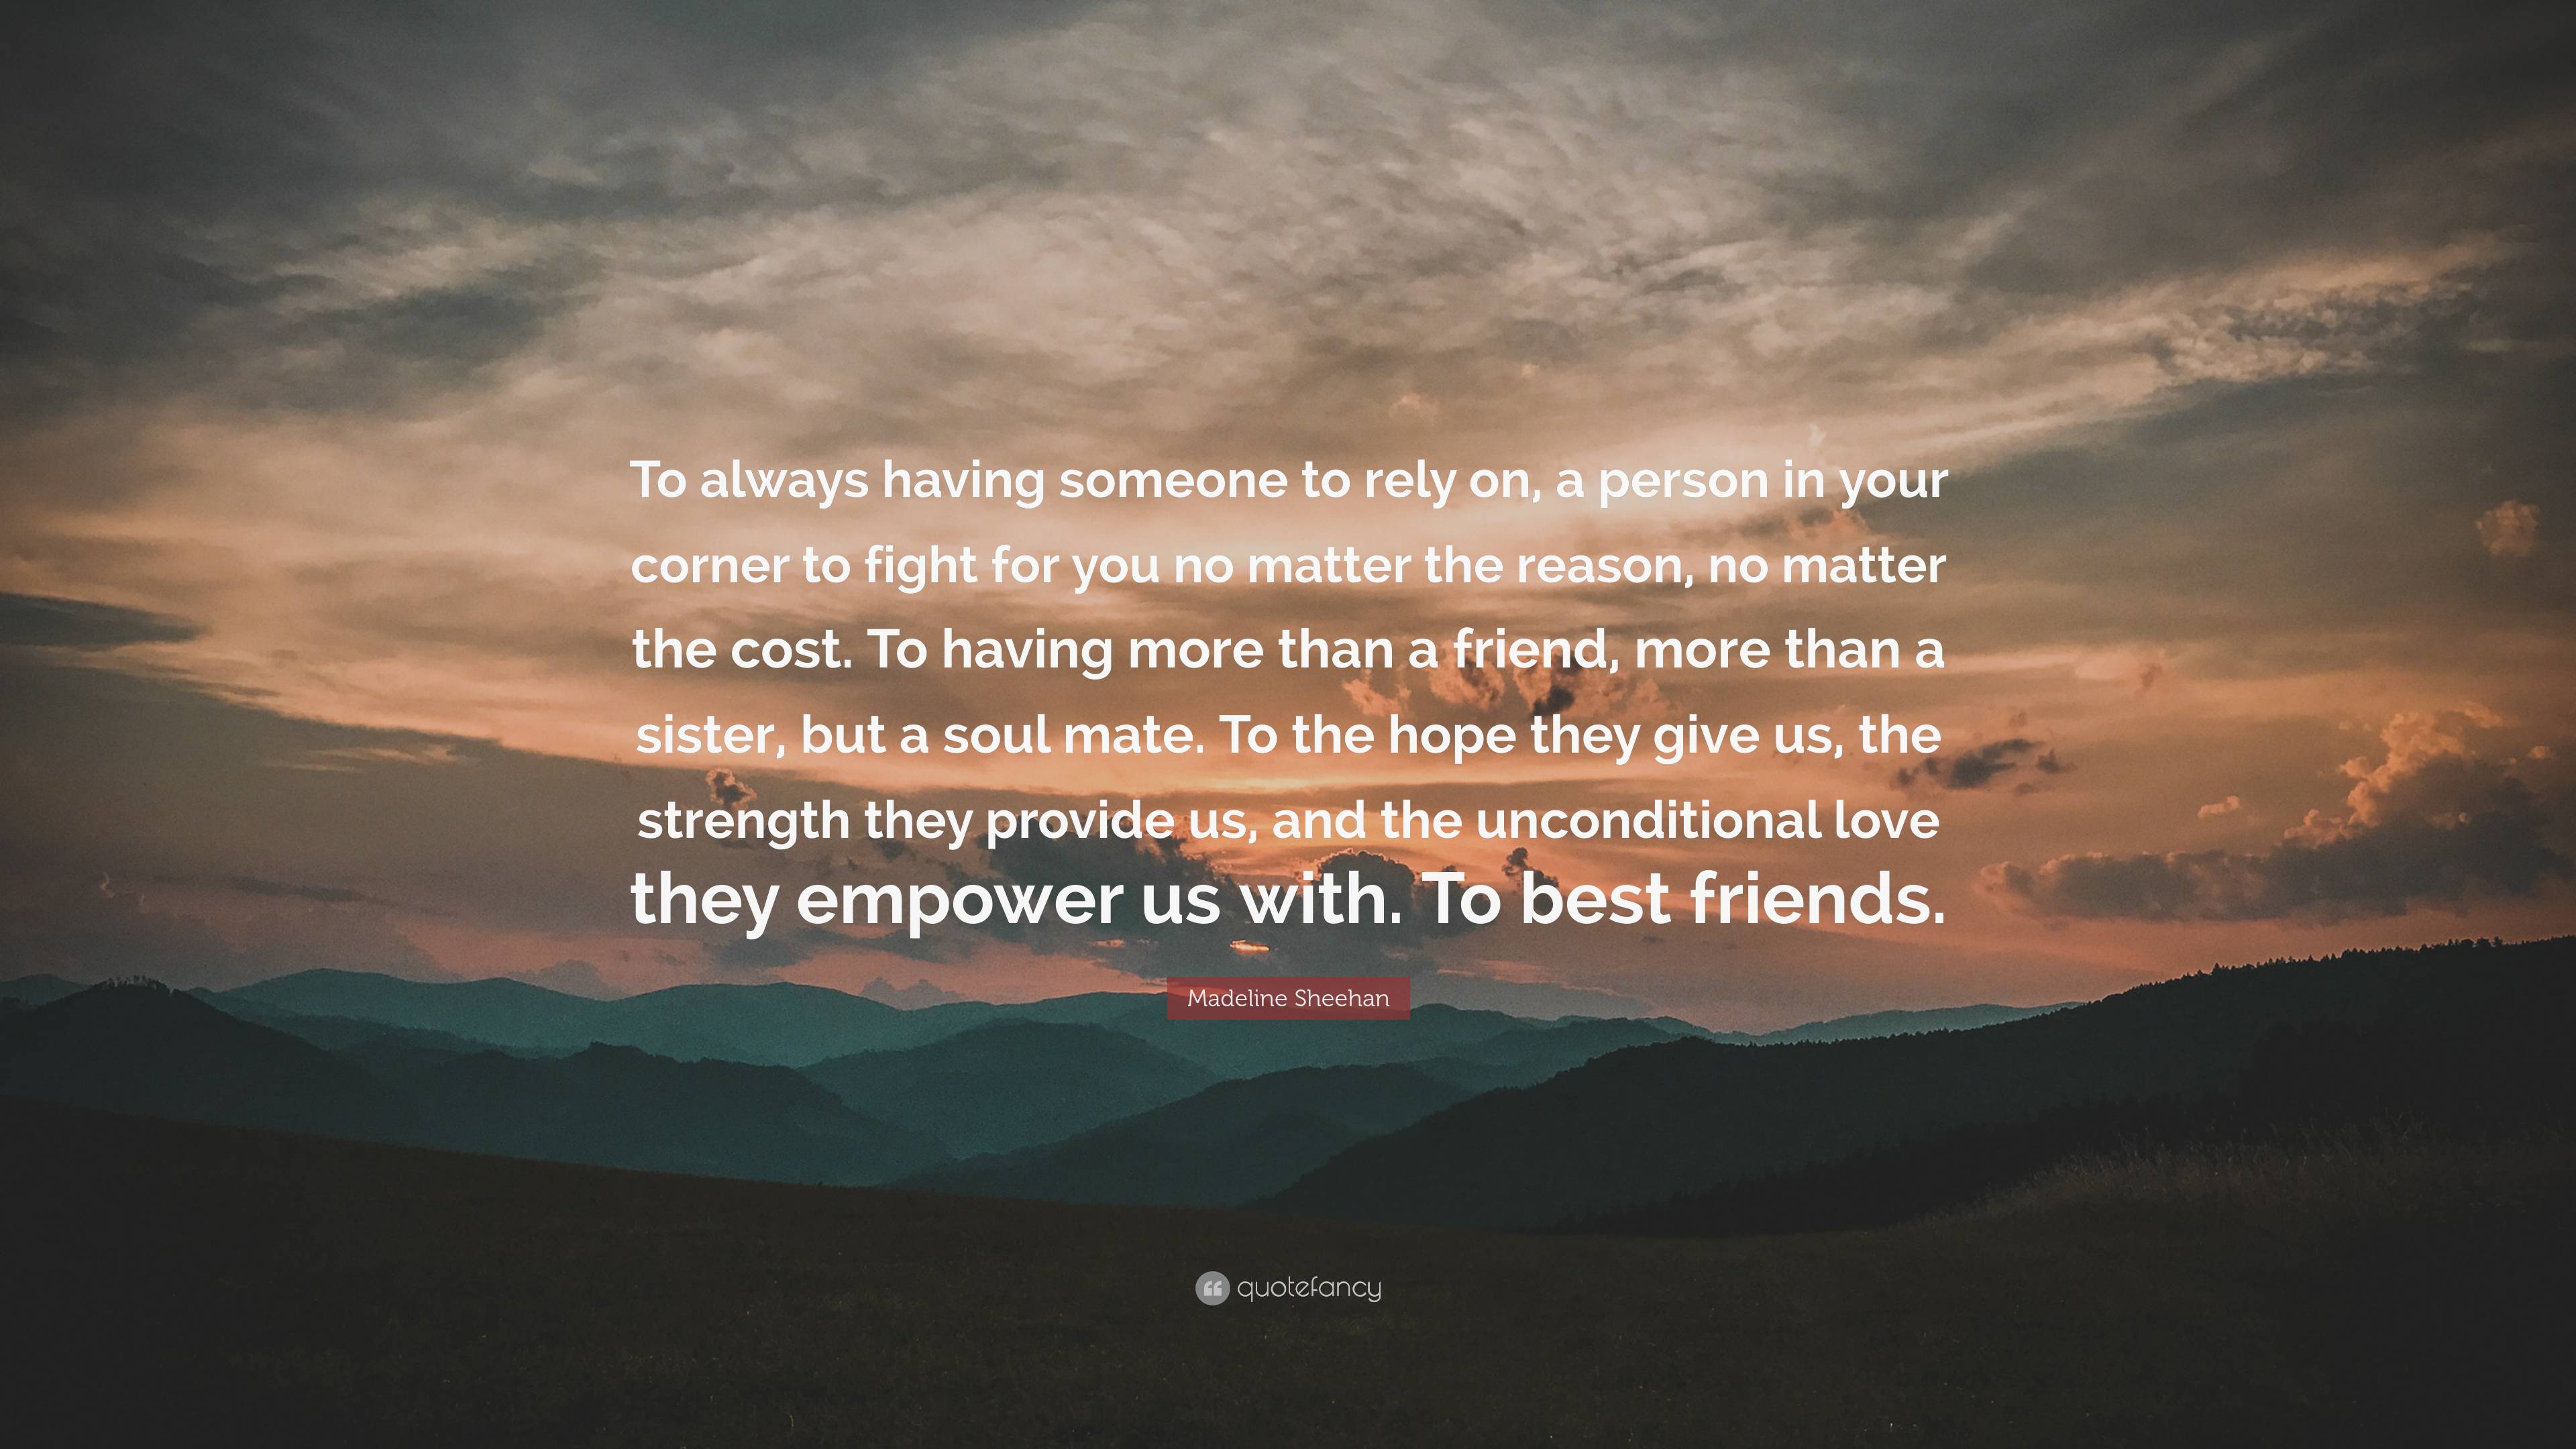 Good friends empower each other